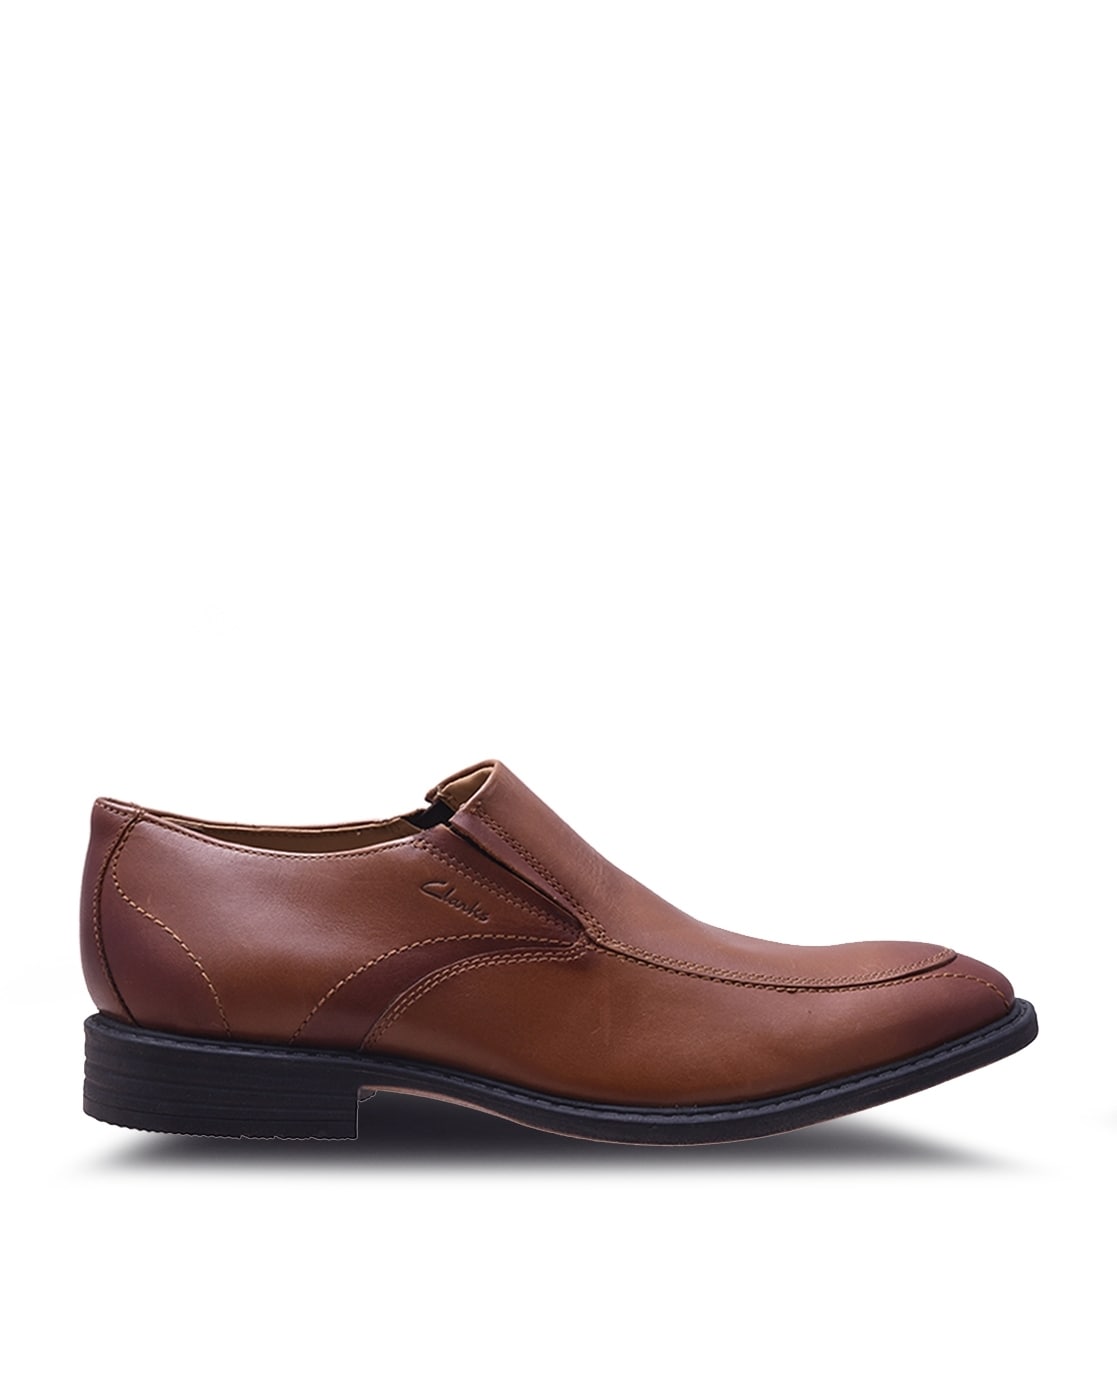 Buy Navy Blue Flat Sandals for Women by CLARKS Online  Ajiocom